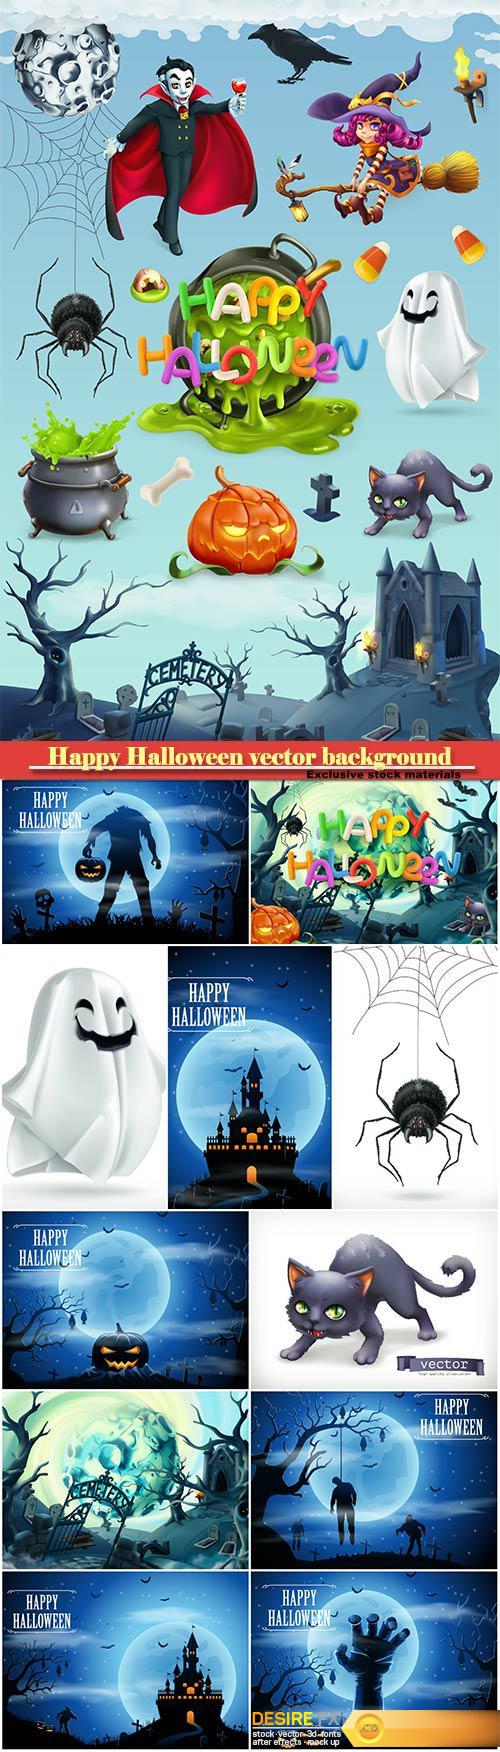 Happy Halloween vector background, pumpkin, spider, cat, witch, vampire and cemetery landscape